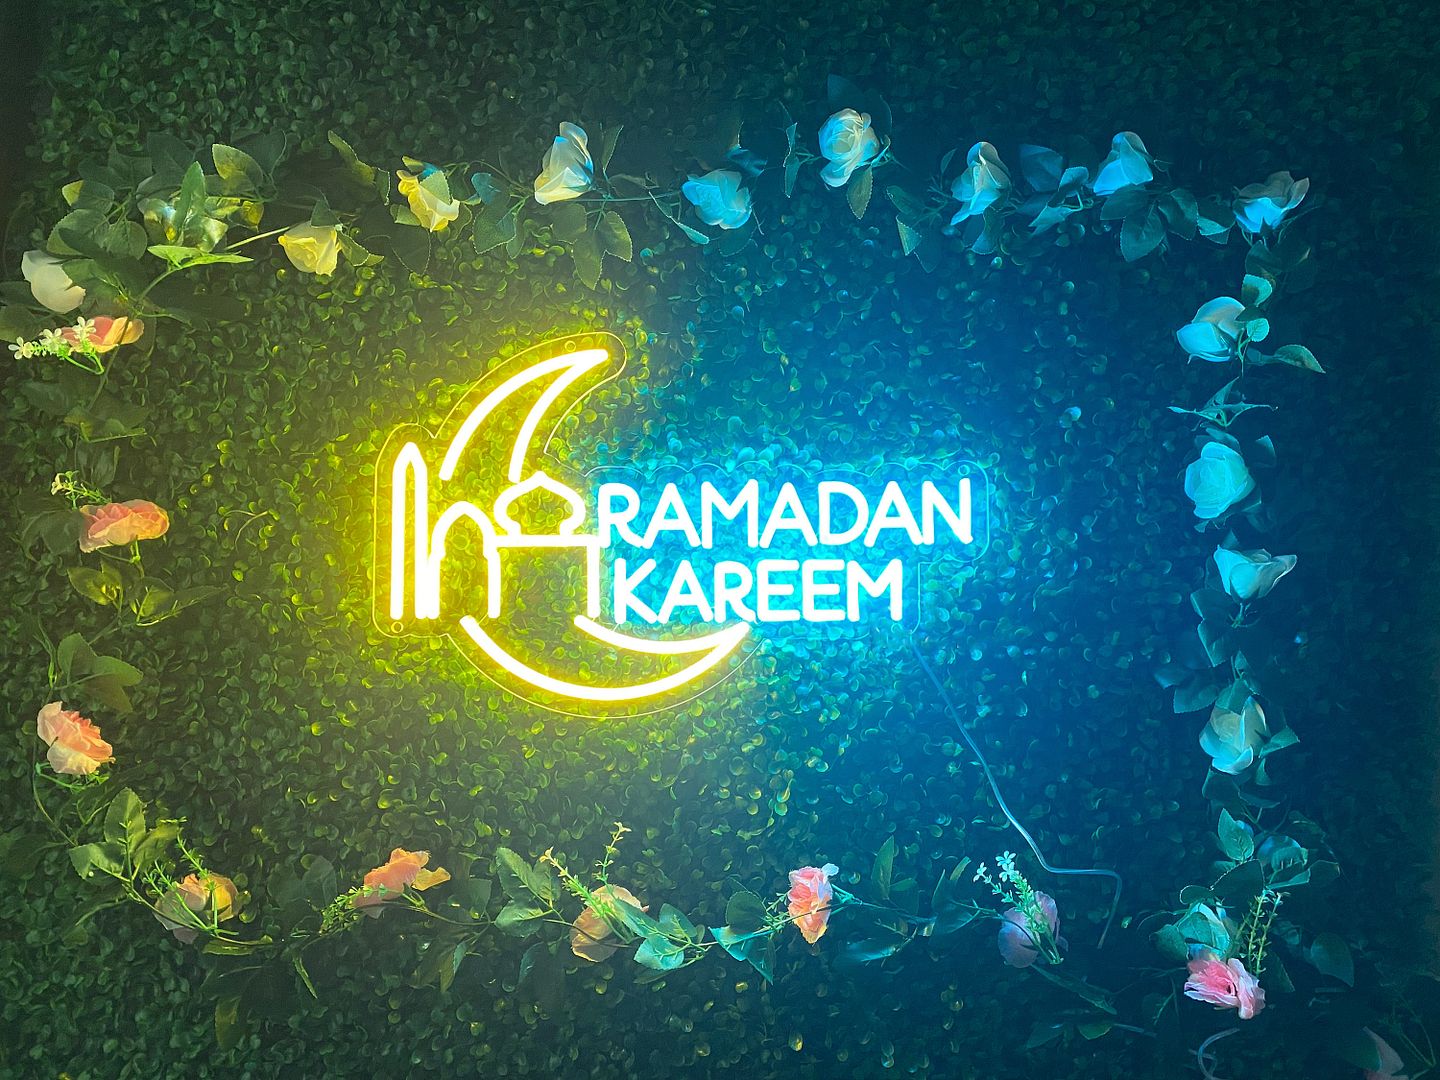 Ramadan Kareem Neon Sign